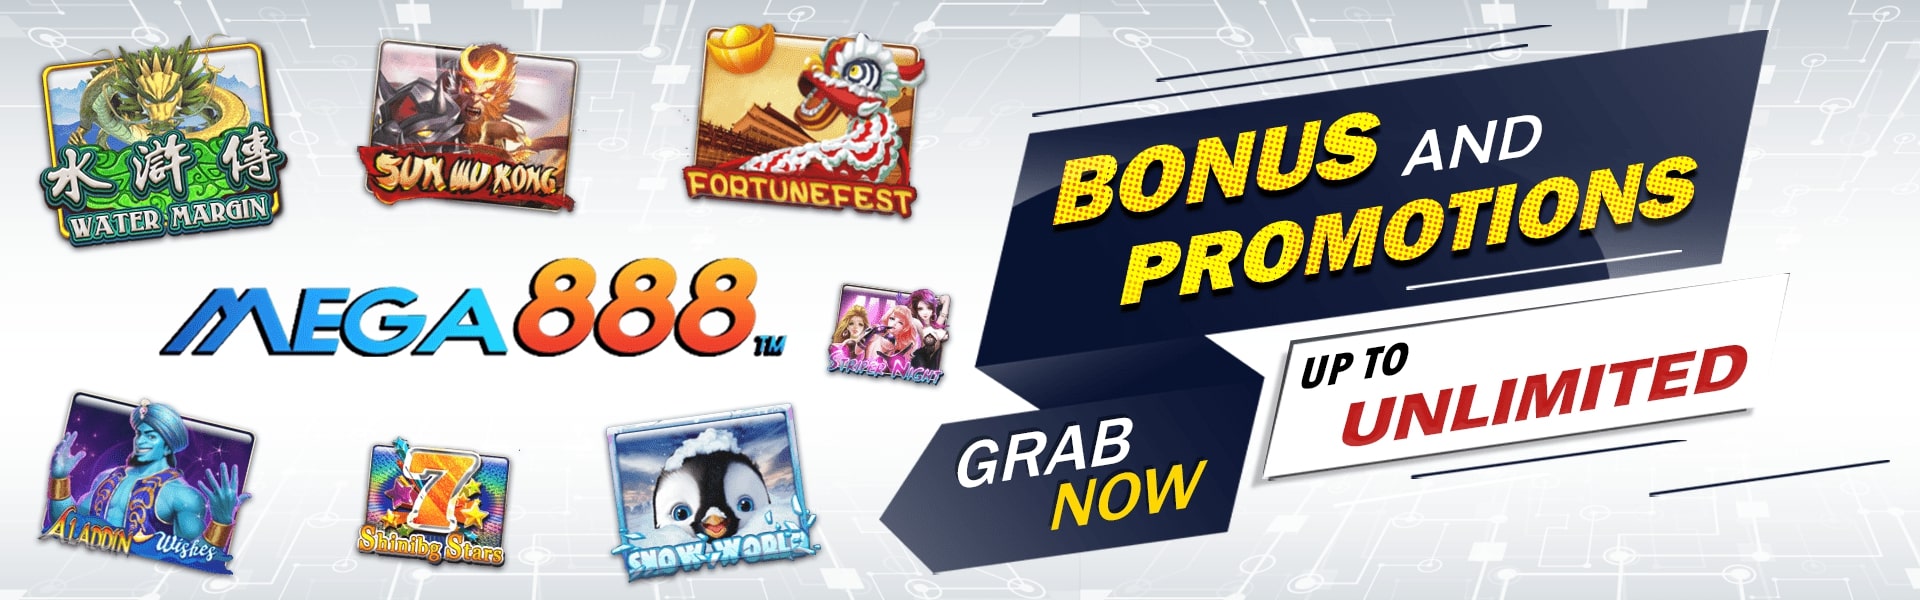 mega888 bonus and promotion banner